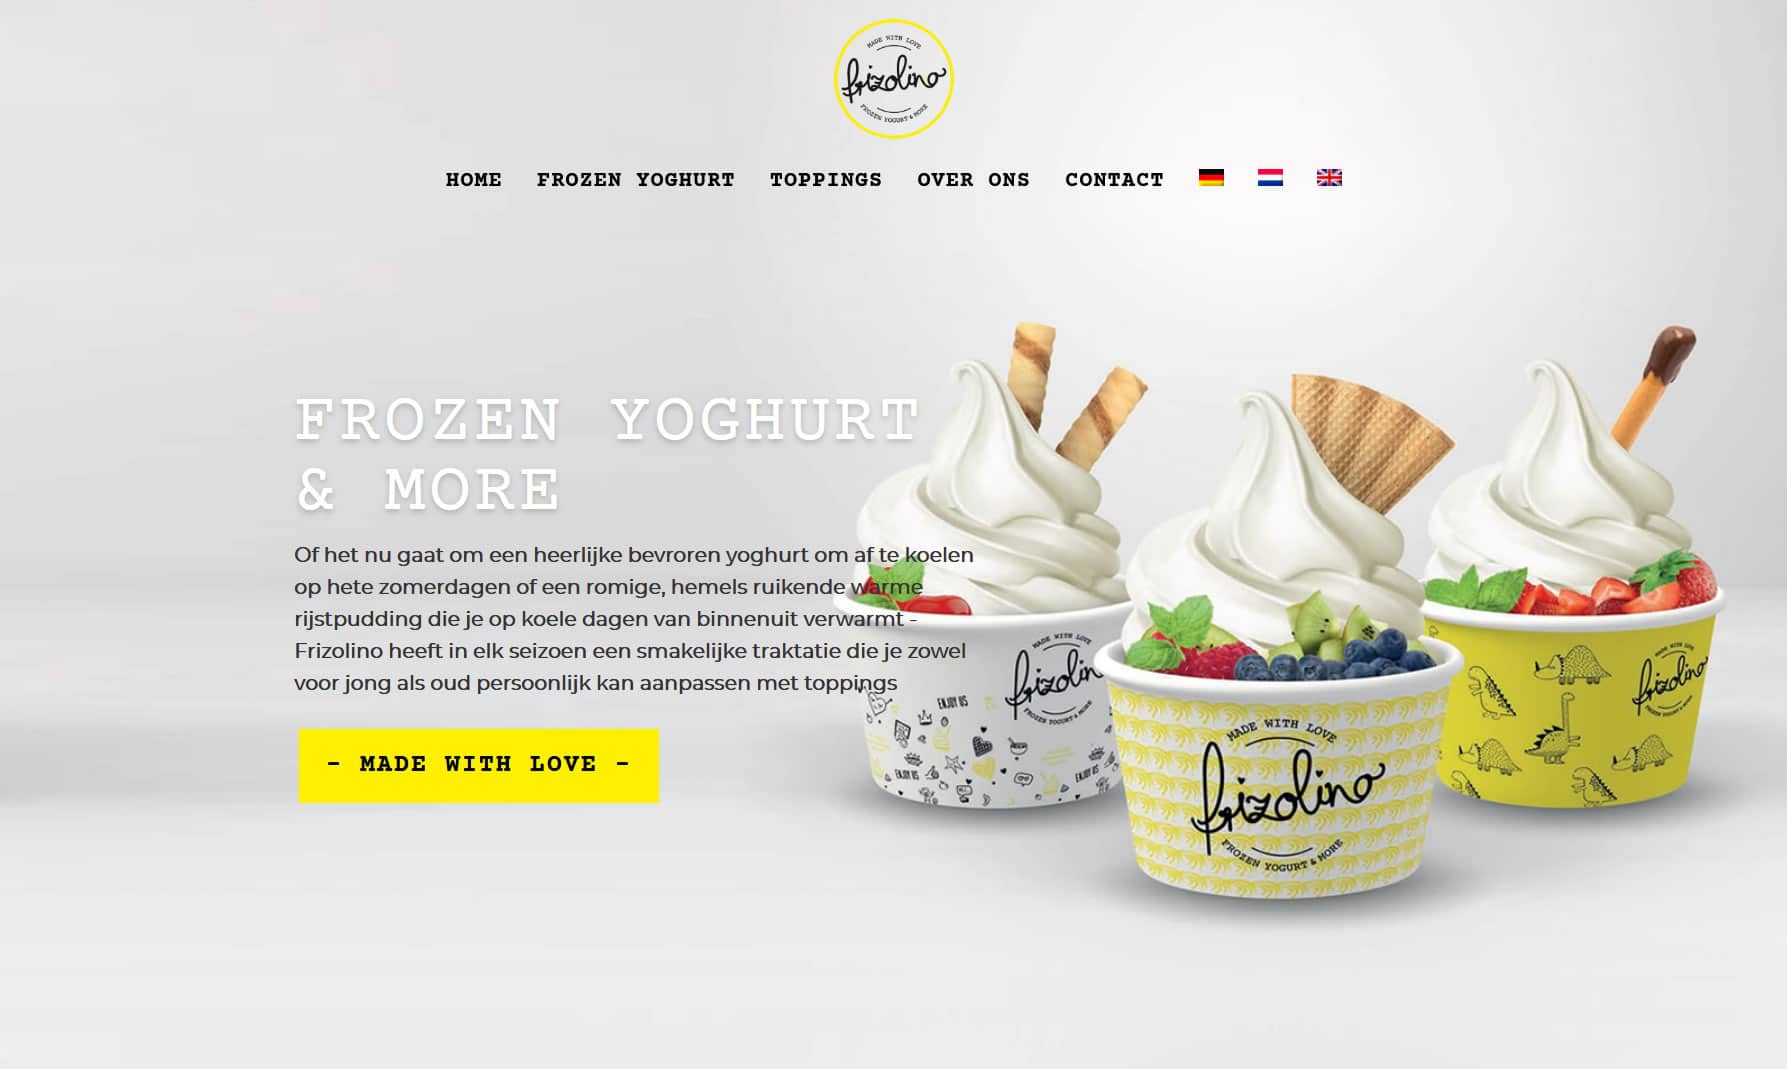 Frizolino Frozen Yoghurt